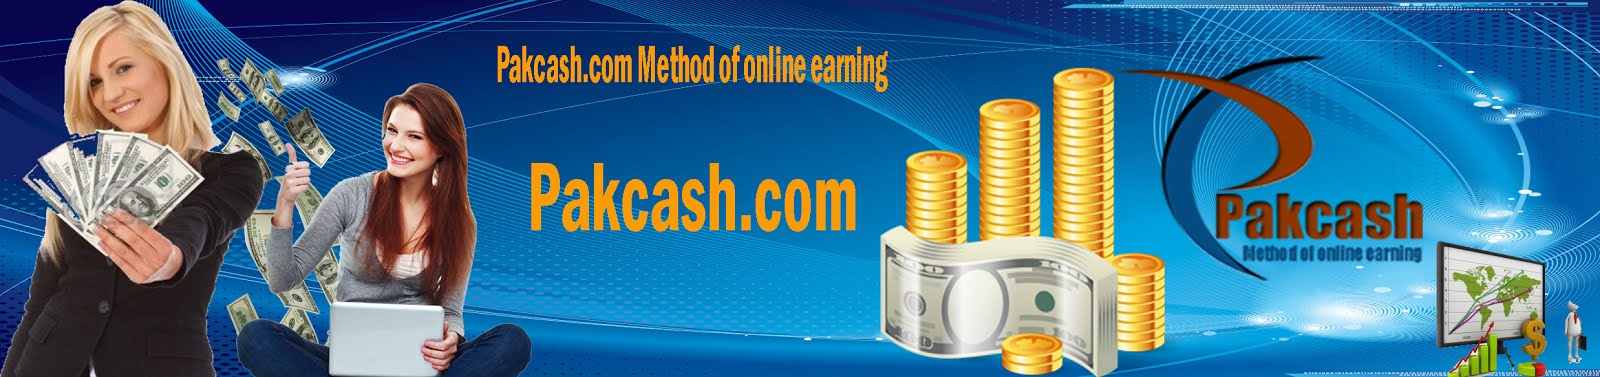 Pakcash.com Online Earning